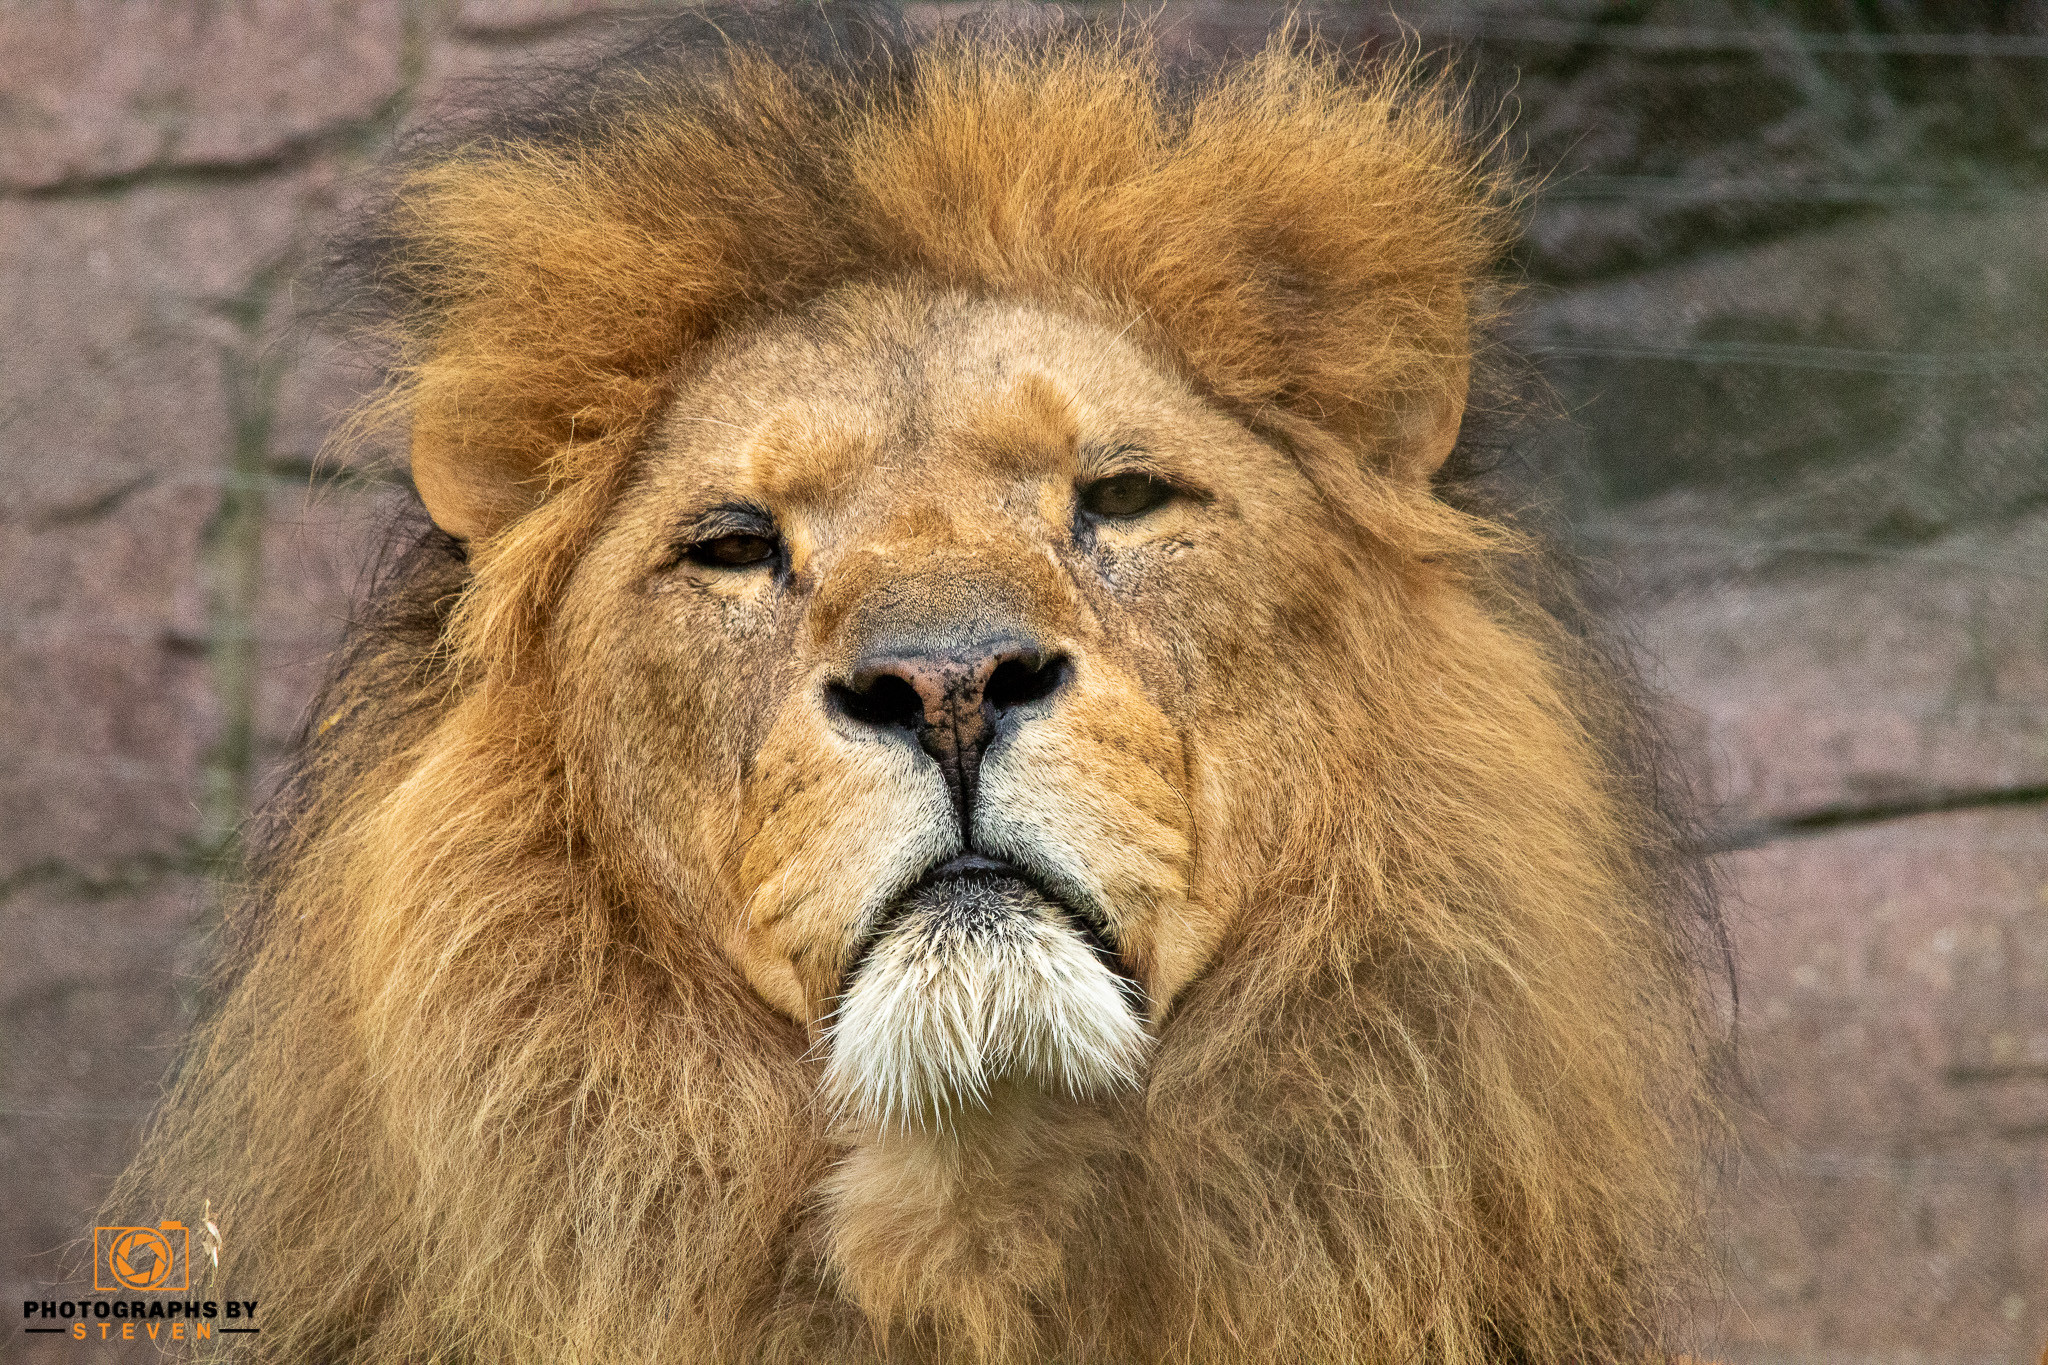 Lion | Photographs by Steven